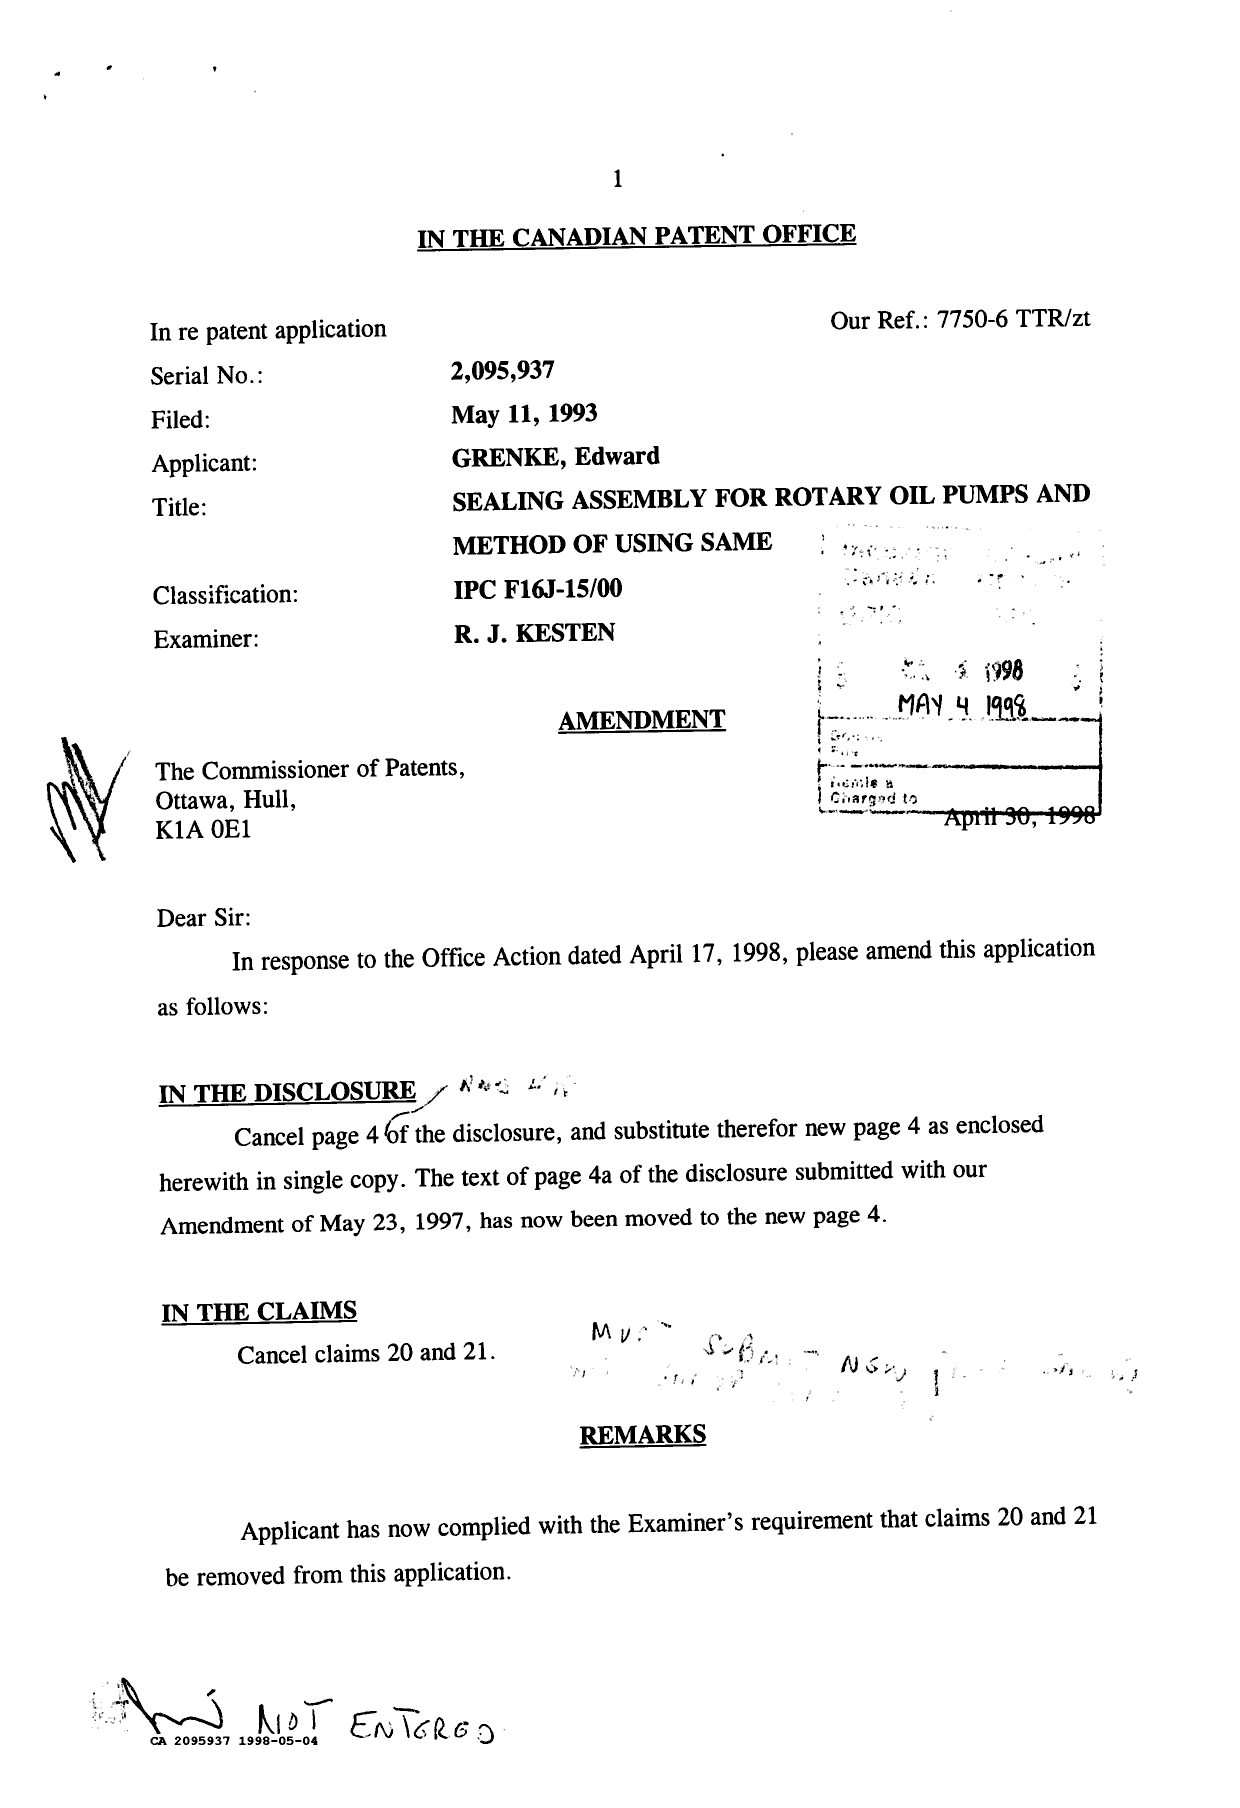 Canadian Patent Document 2095937. Prosecution Correspondence 19980504. Image 1 of 2